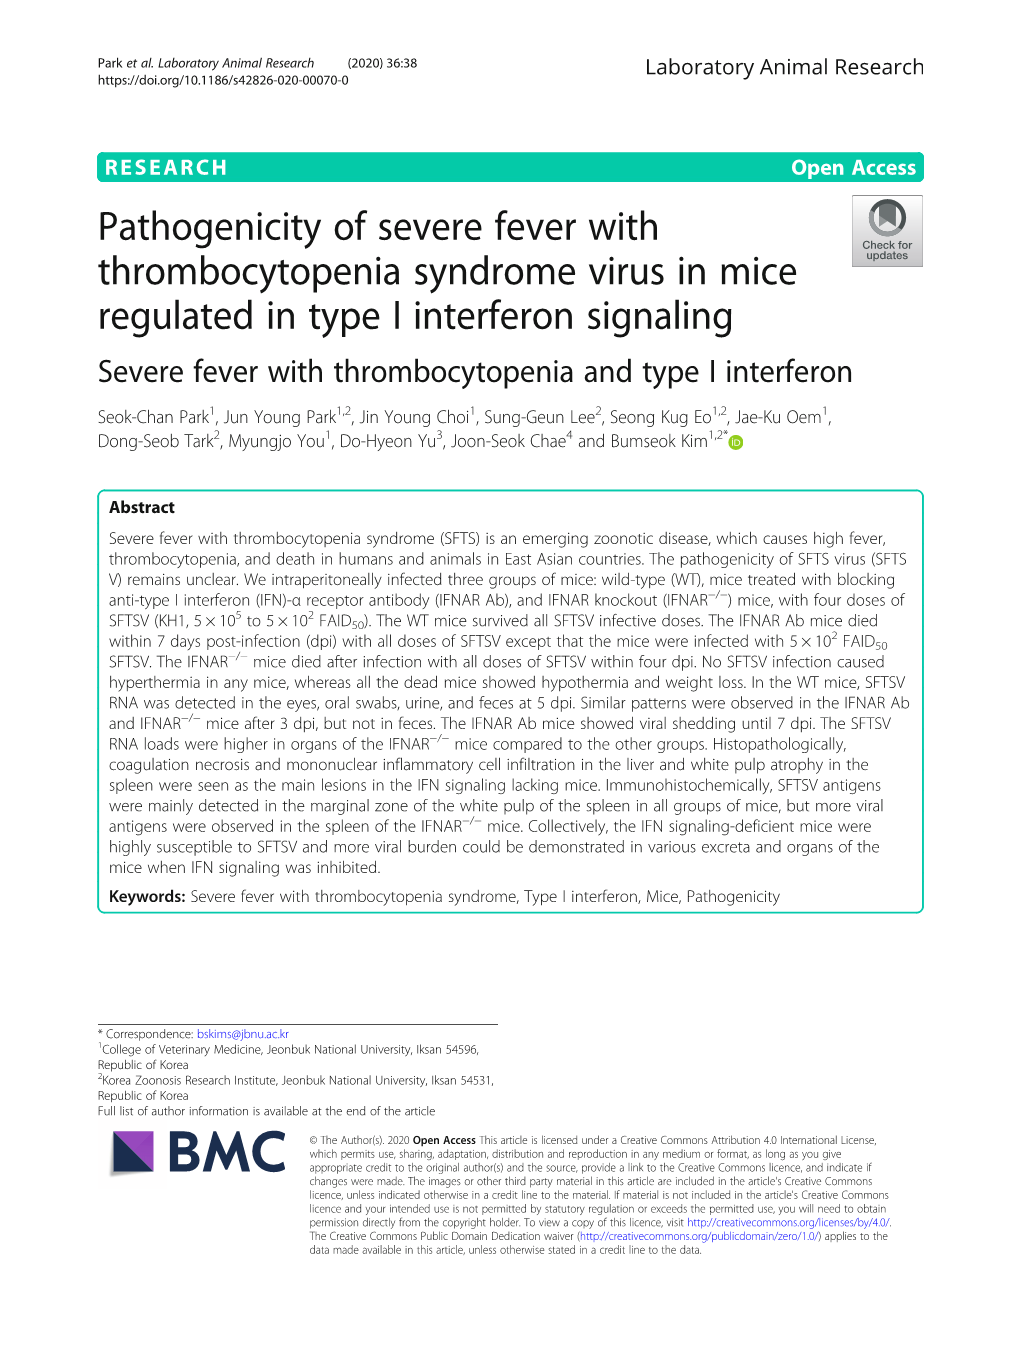 Pathogenicity of Severe Fever with Thrombocytopenia Syndrome Virus